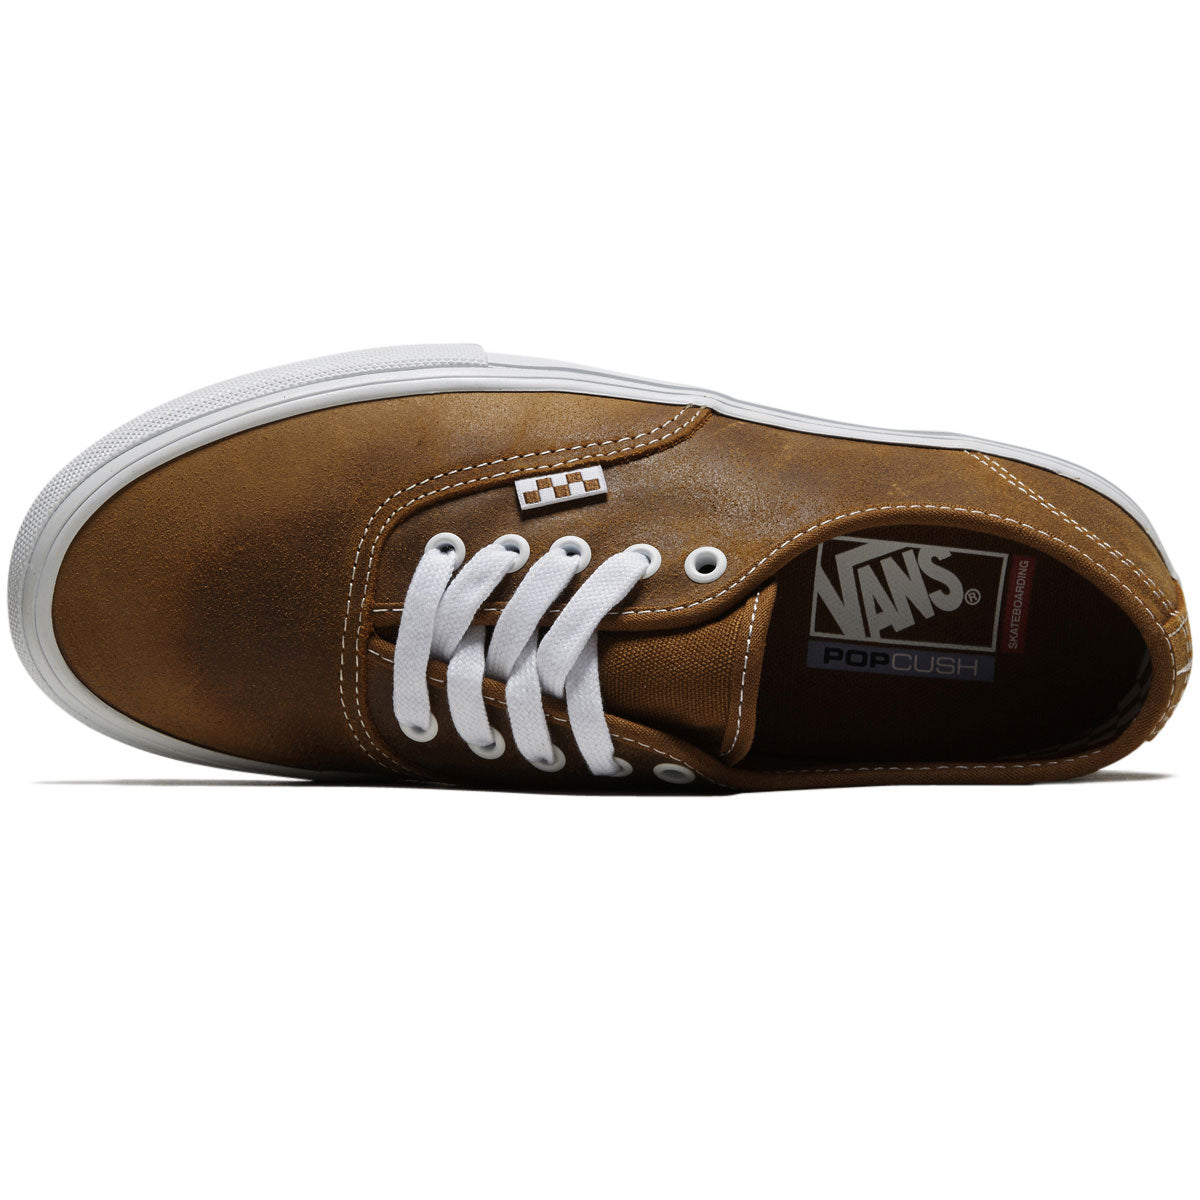 Vans Skate Authentic Shoes - Fatal Floral Golden Brown image 3